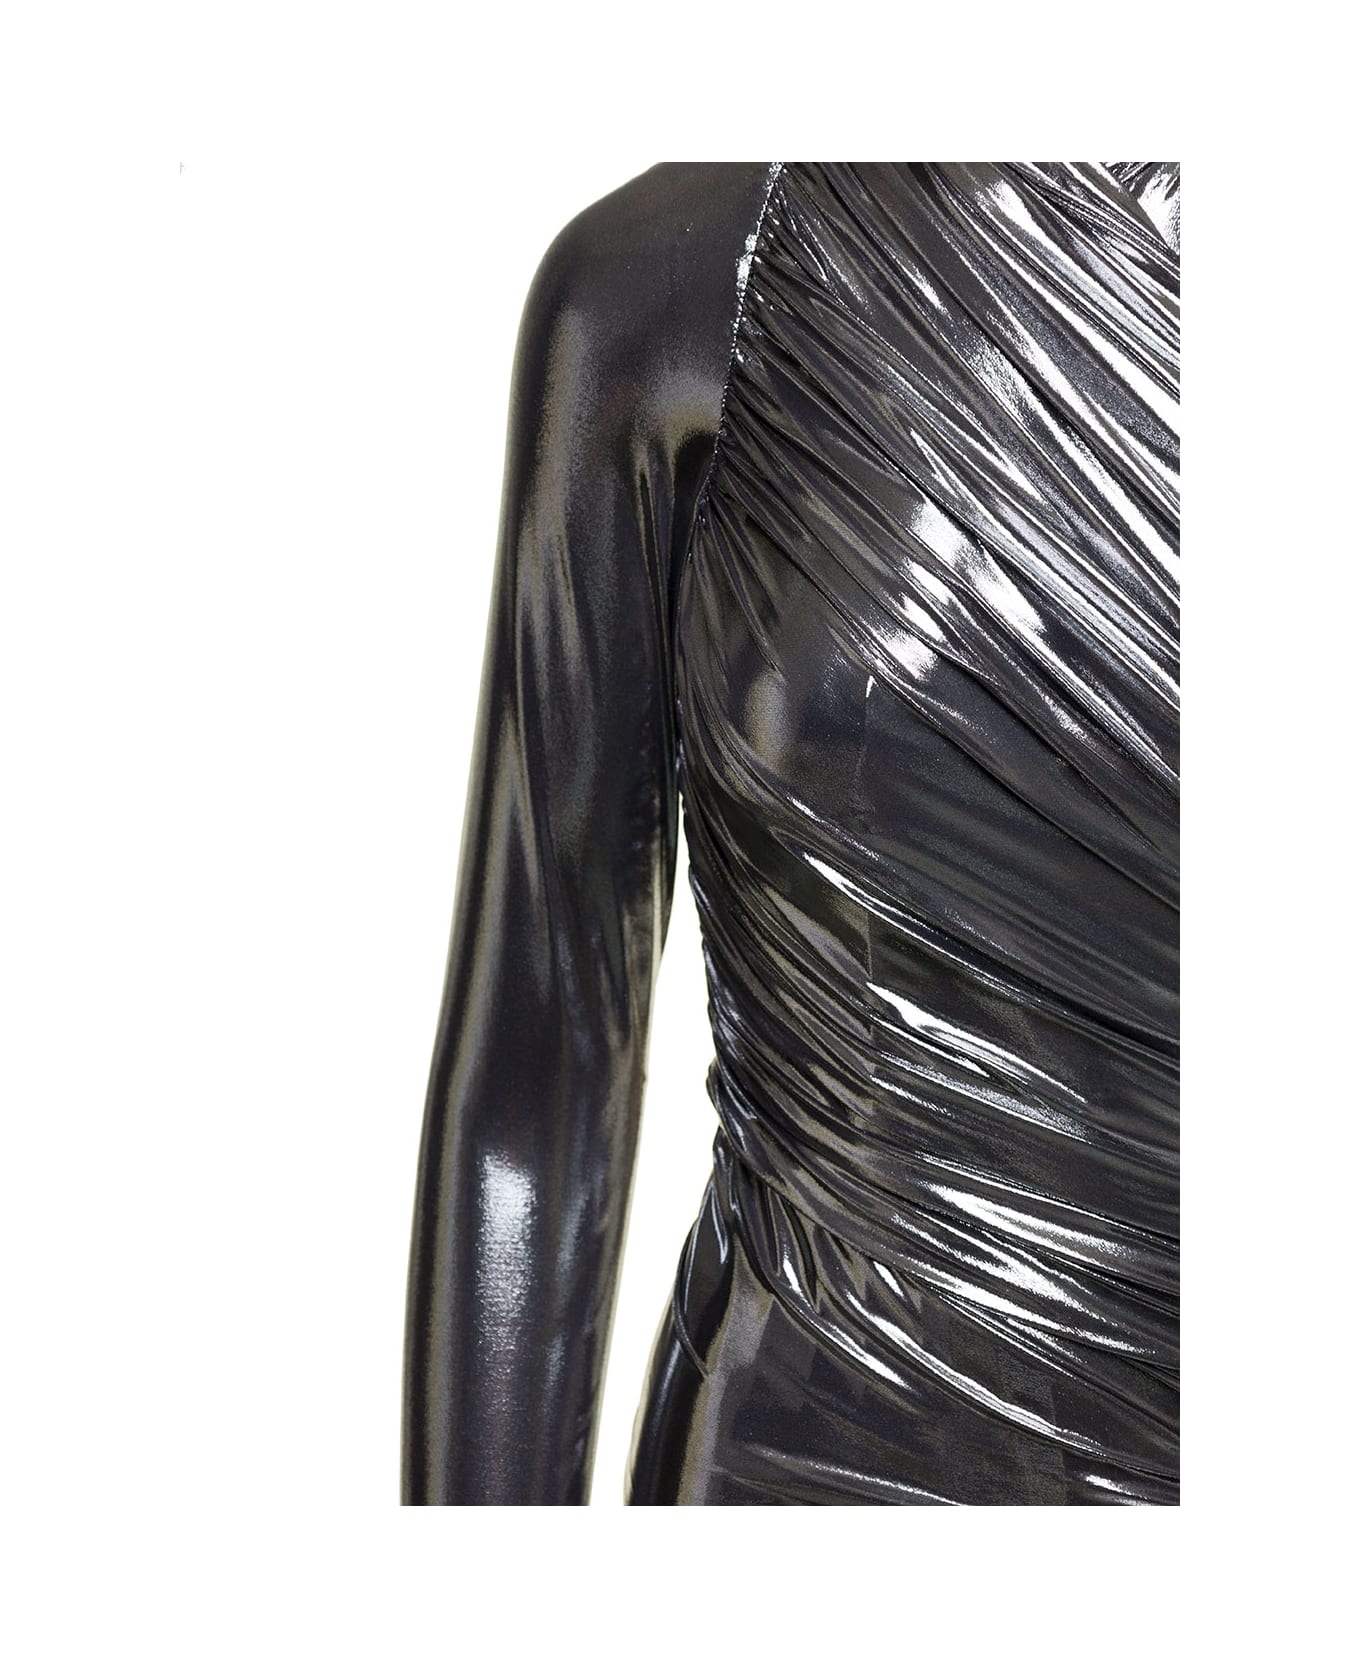 Ferragamo Mini Silver-colored Gathered Dress In Laminated Fabric Woman - Metallic